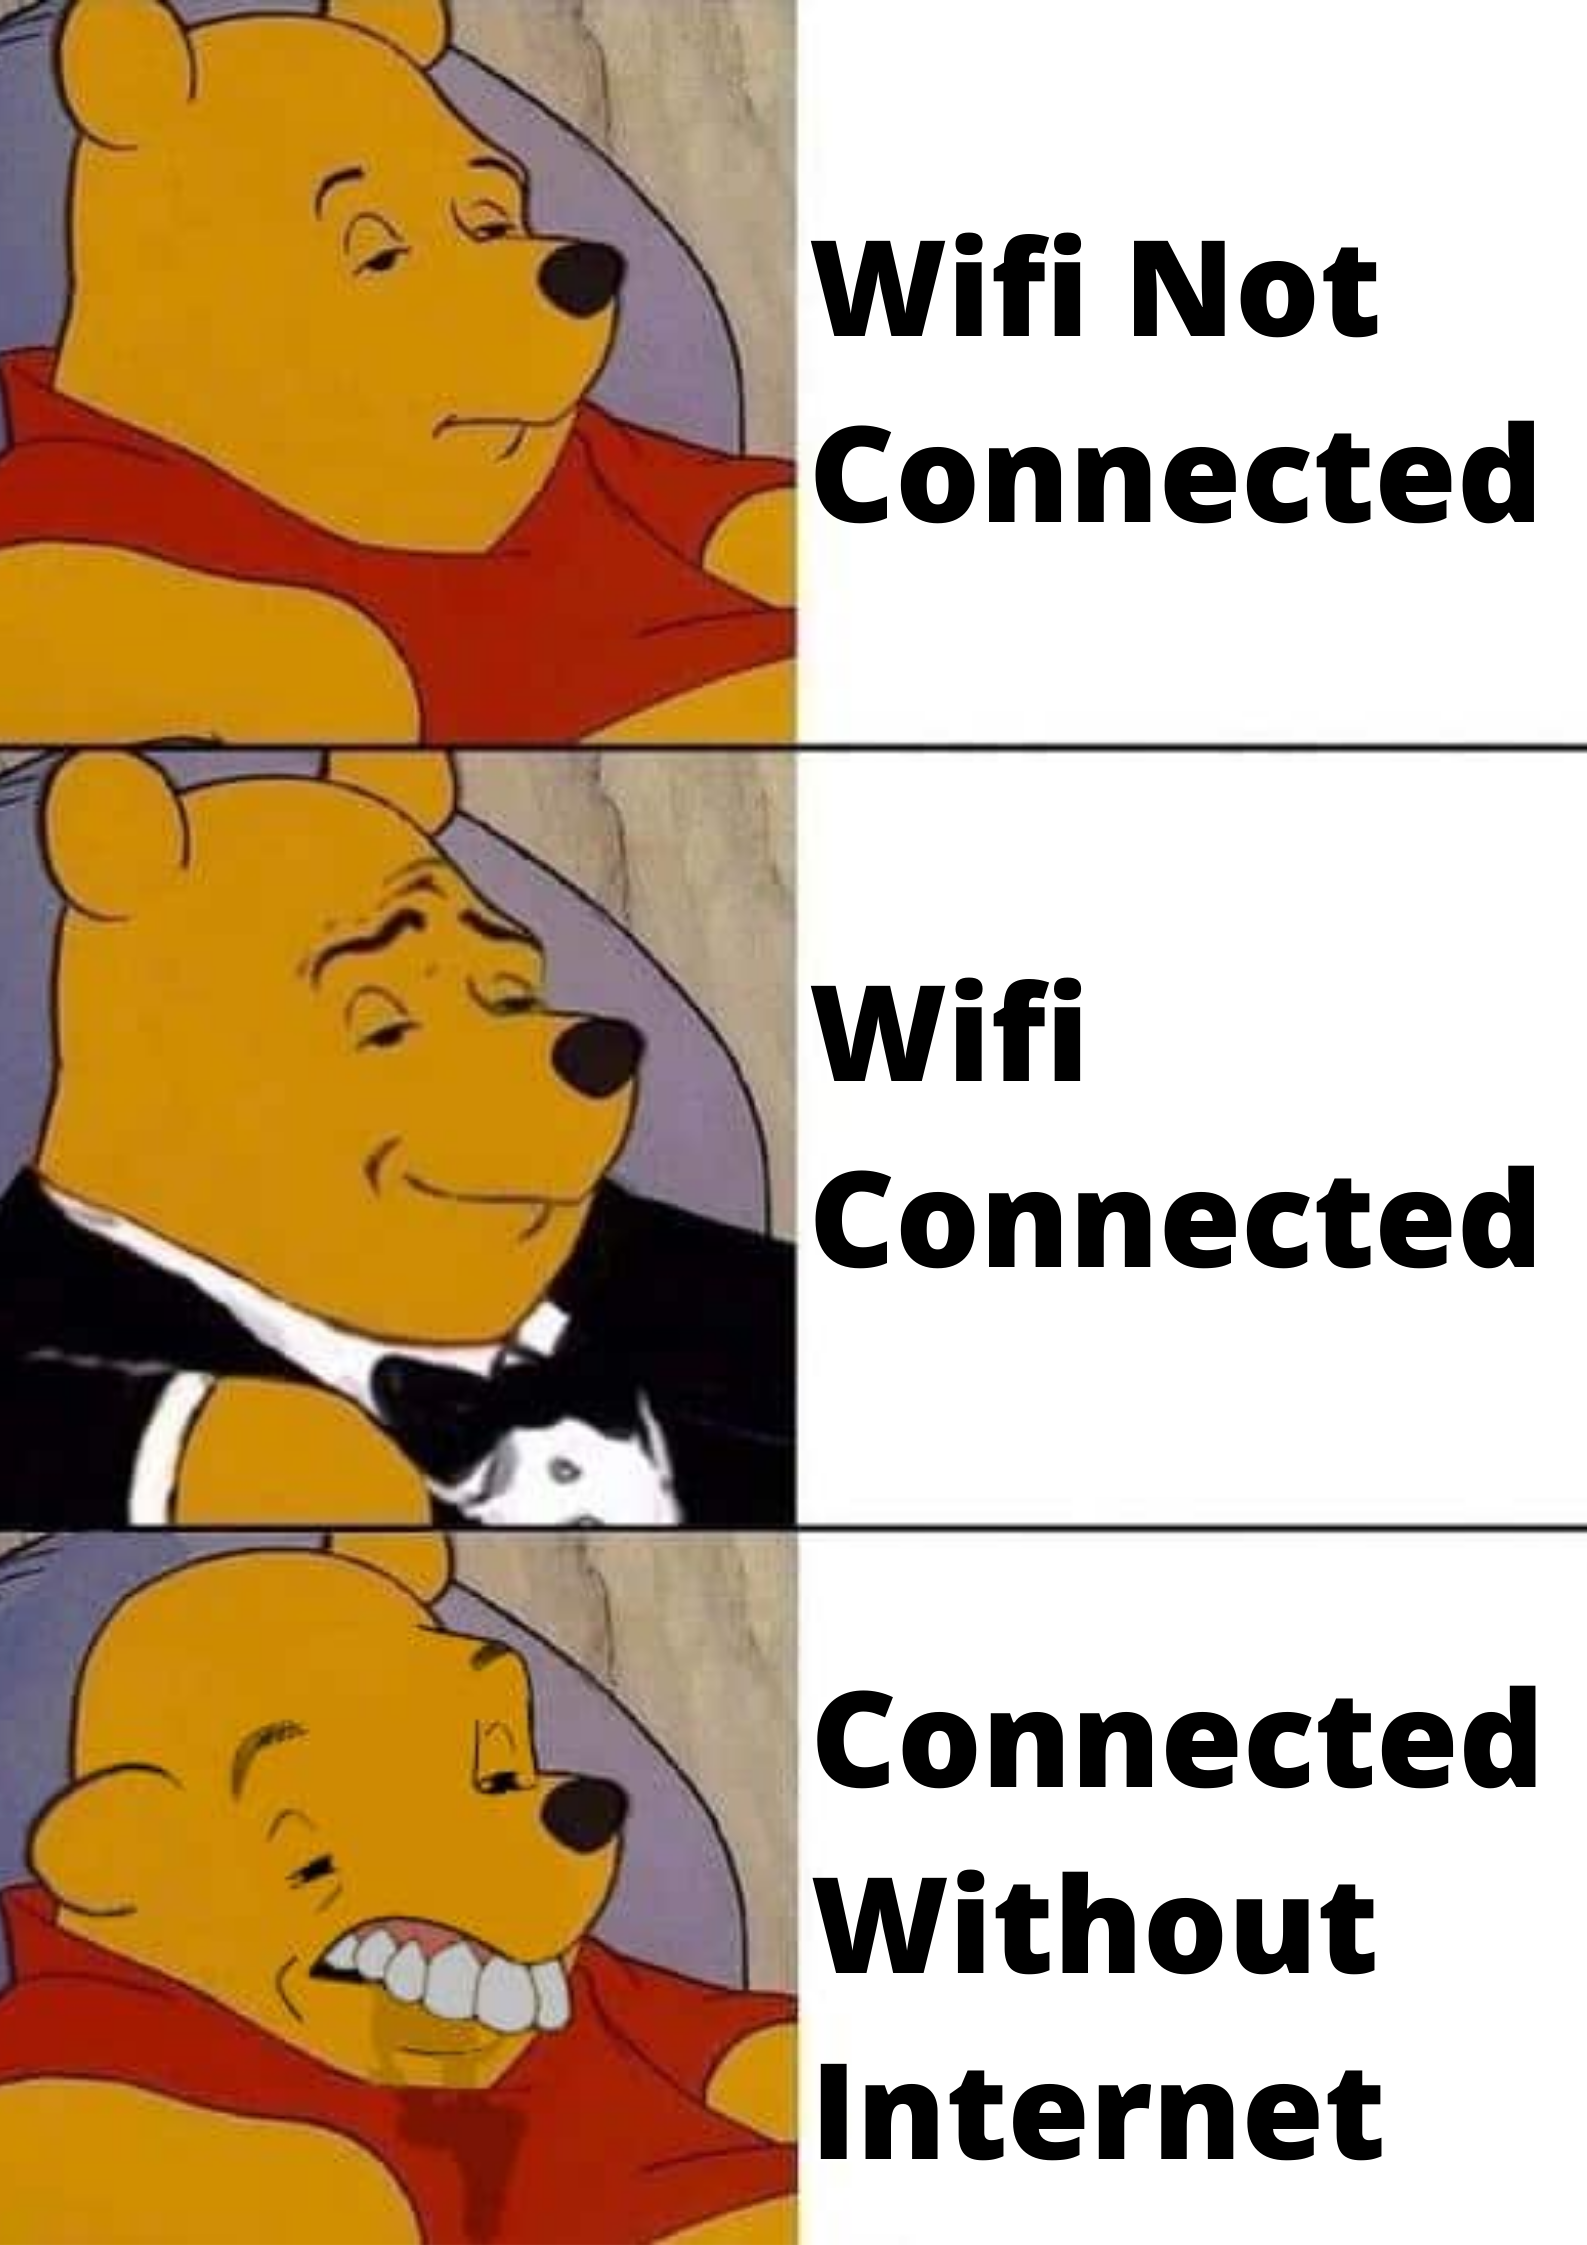 funny memes - cod zombies meme - Wifi Not Connected Wifi Connected Connected Without Internet